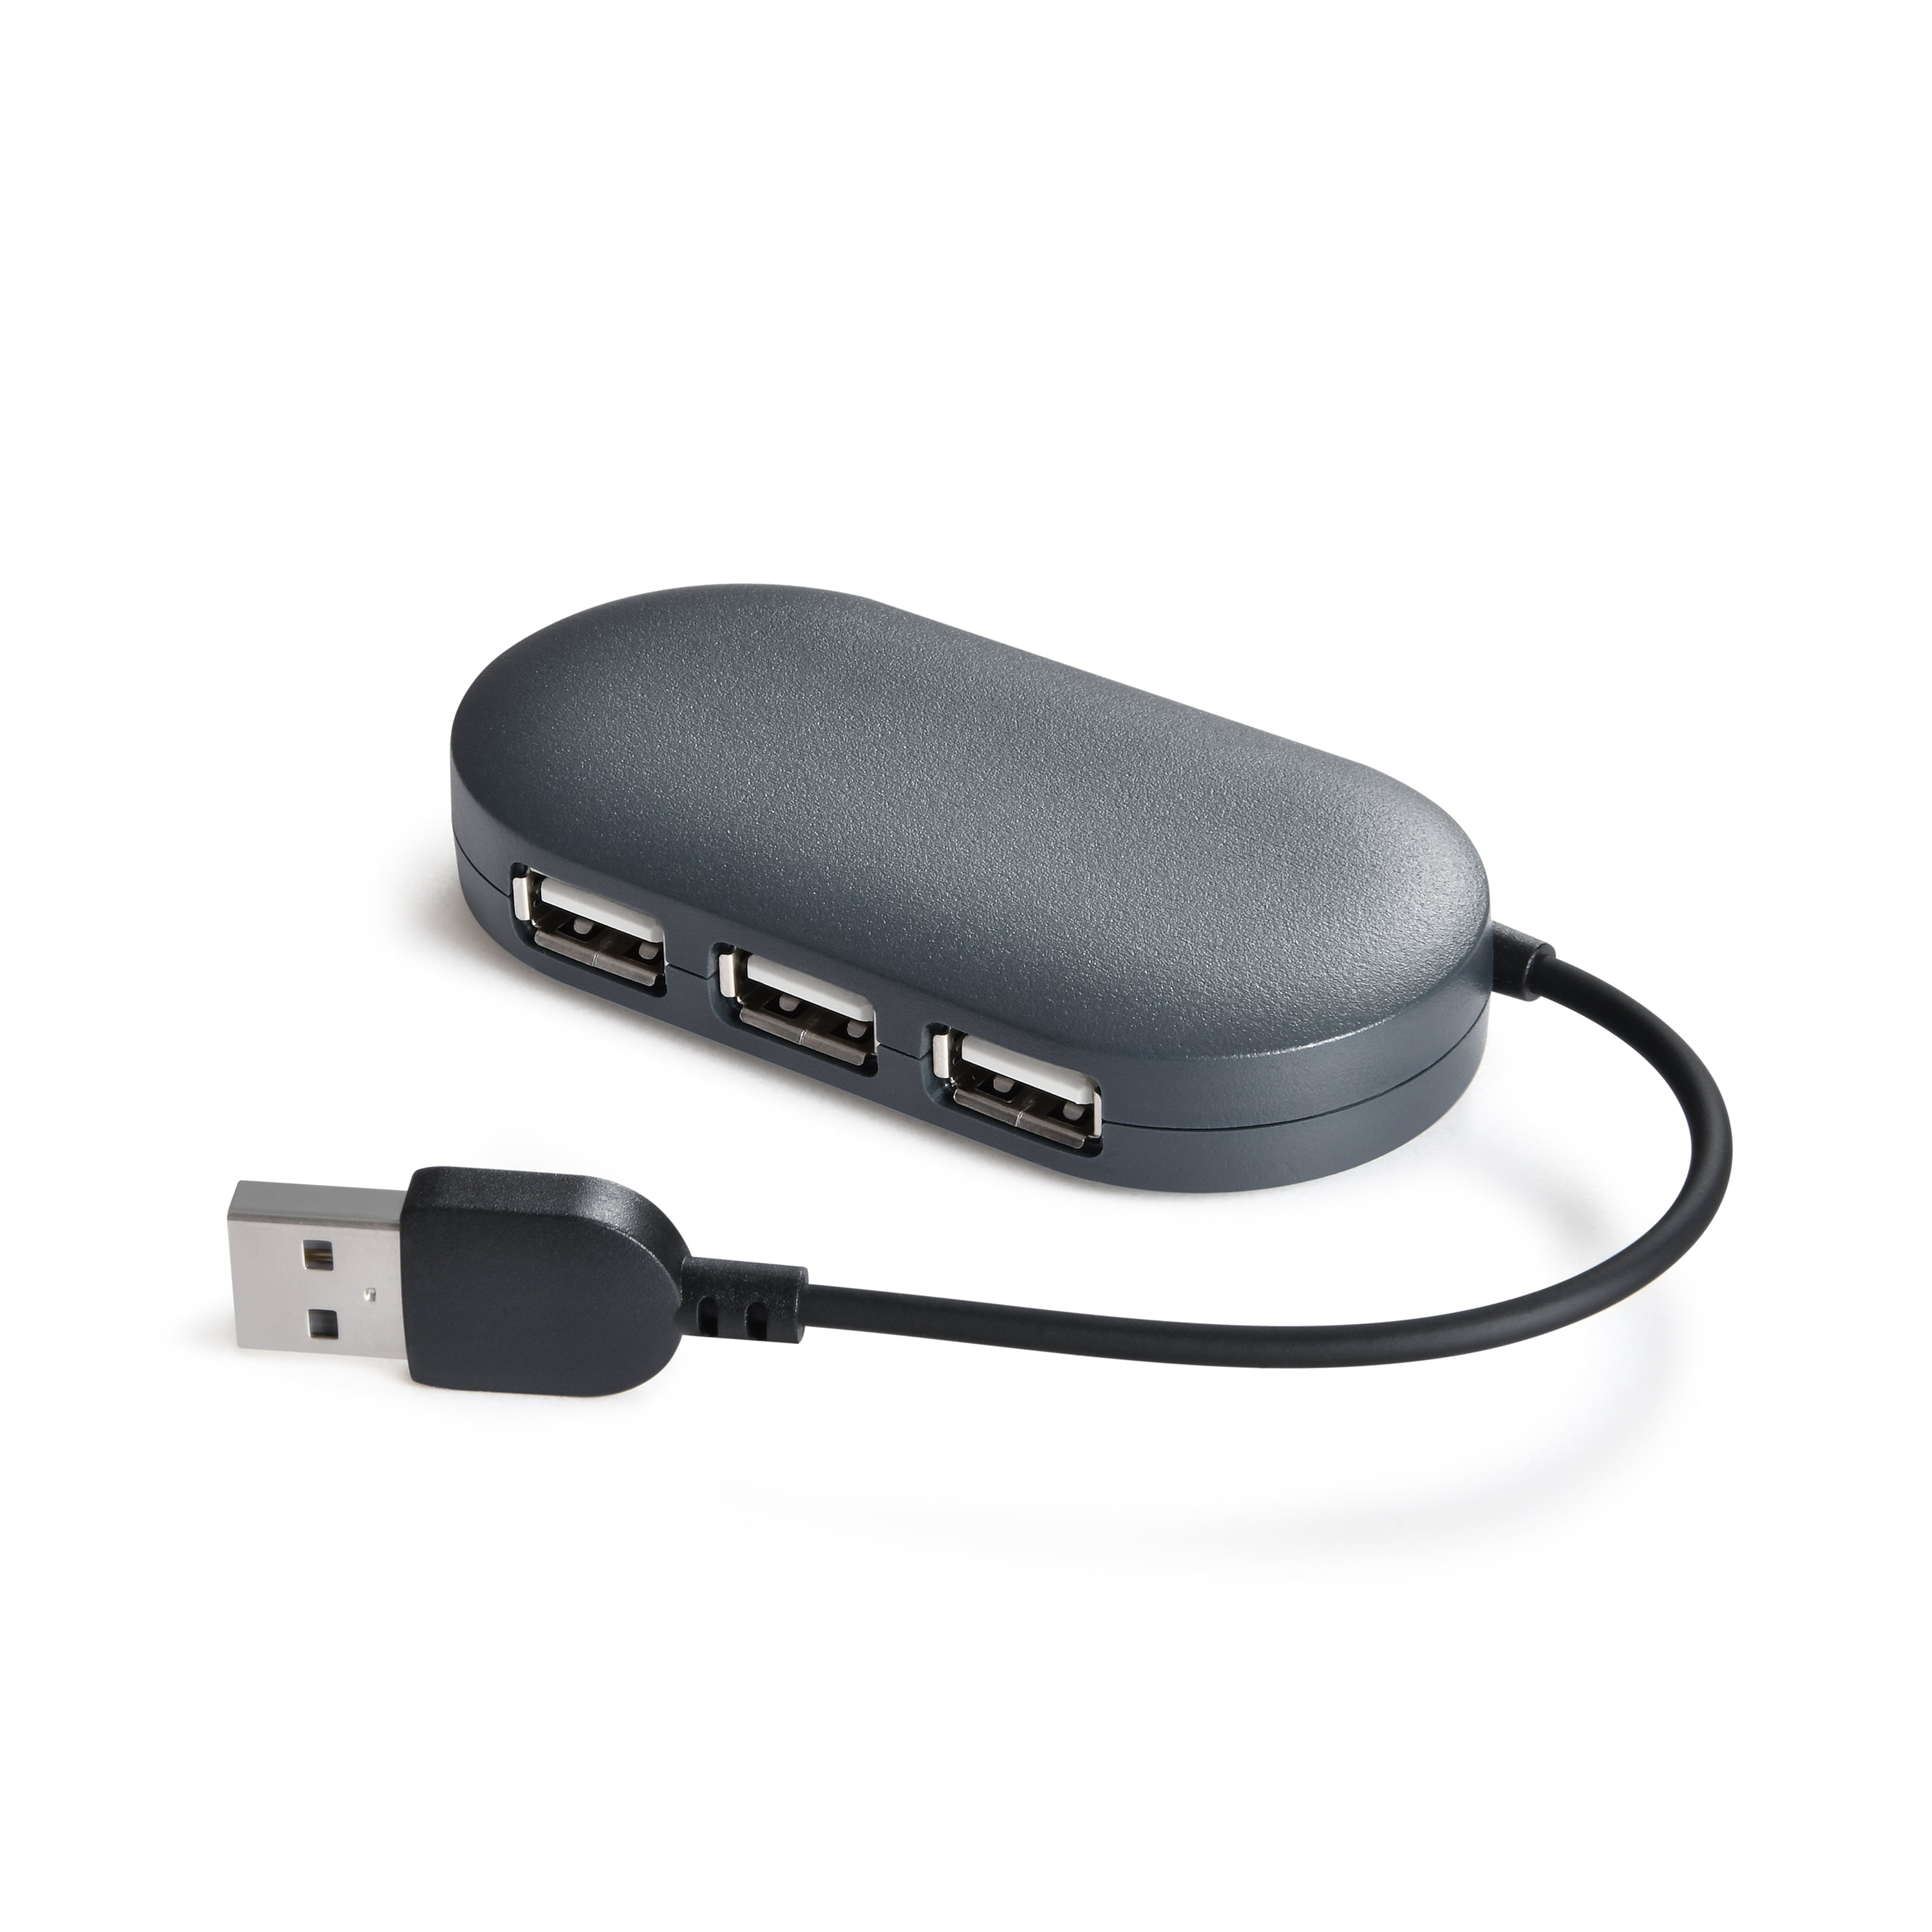 tyve spektrum Frank Worthley onn. Portable 4-Port USB Hub with USB 2.0 Ports - Walmart.com